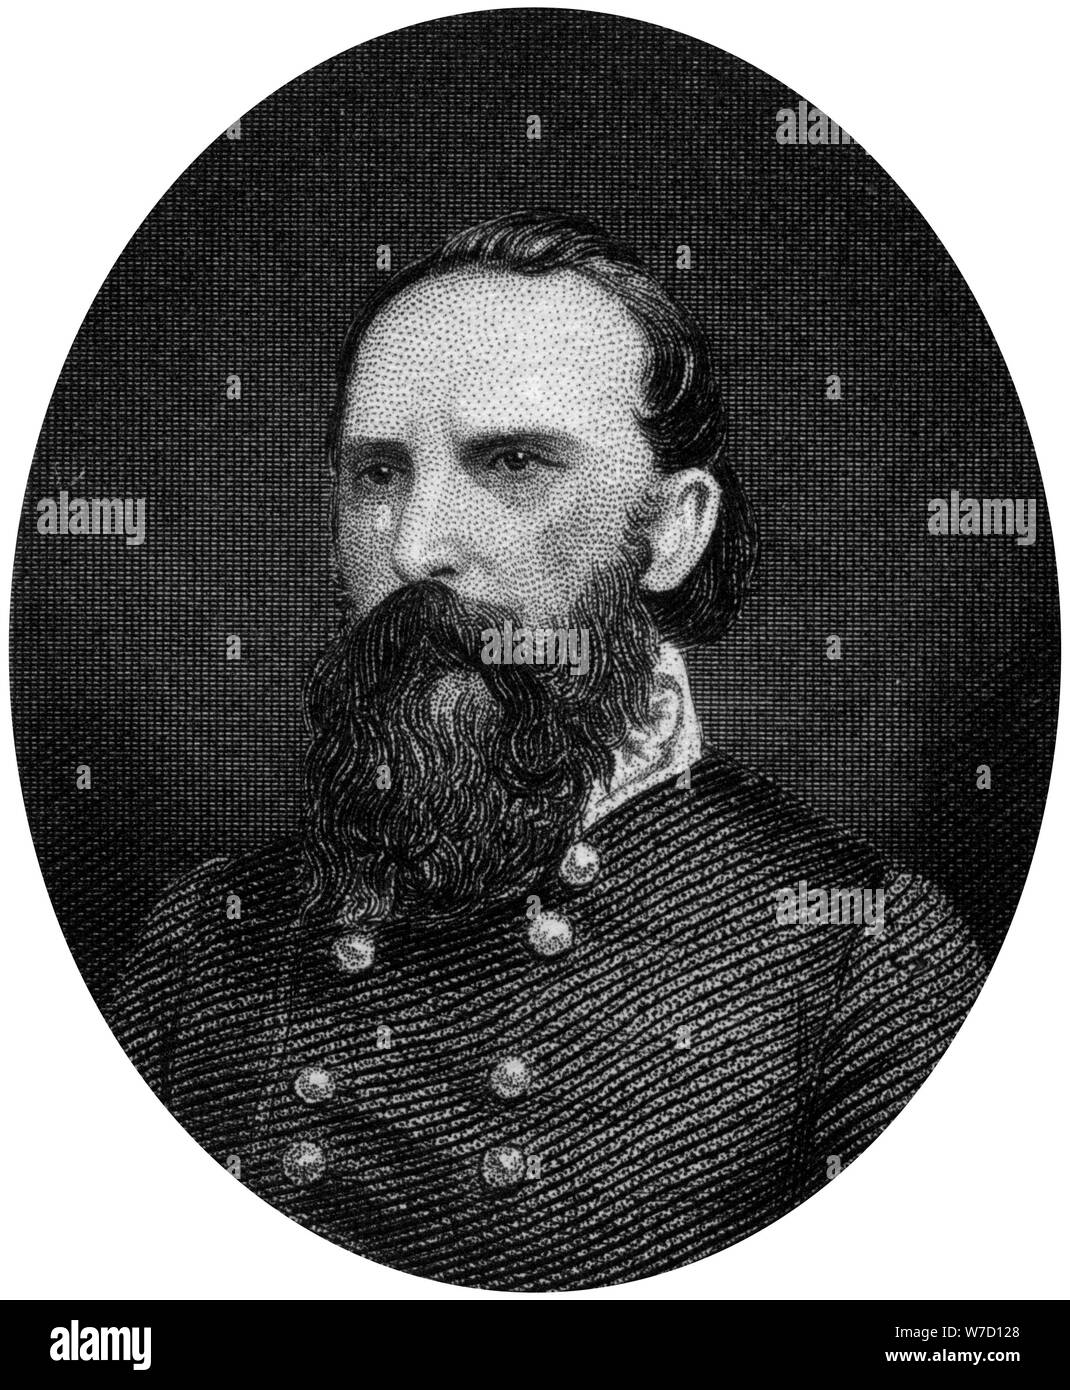 James Longstreet, Confederate general, 1862-1867.Artist: J Rogers Stock Photo